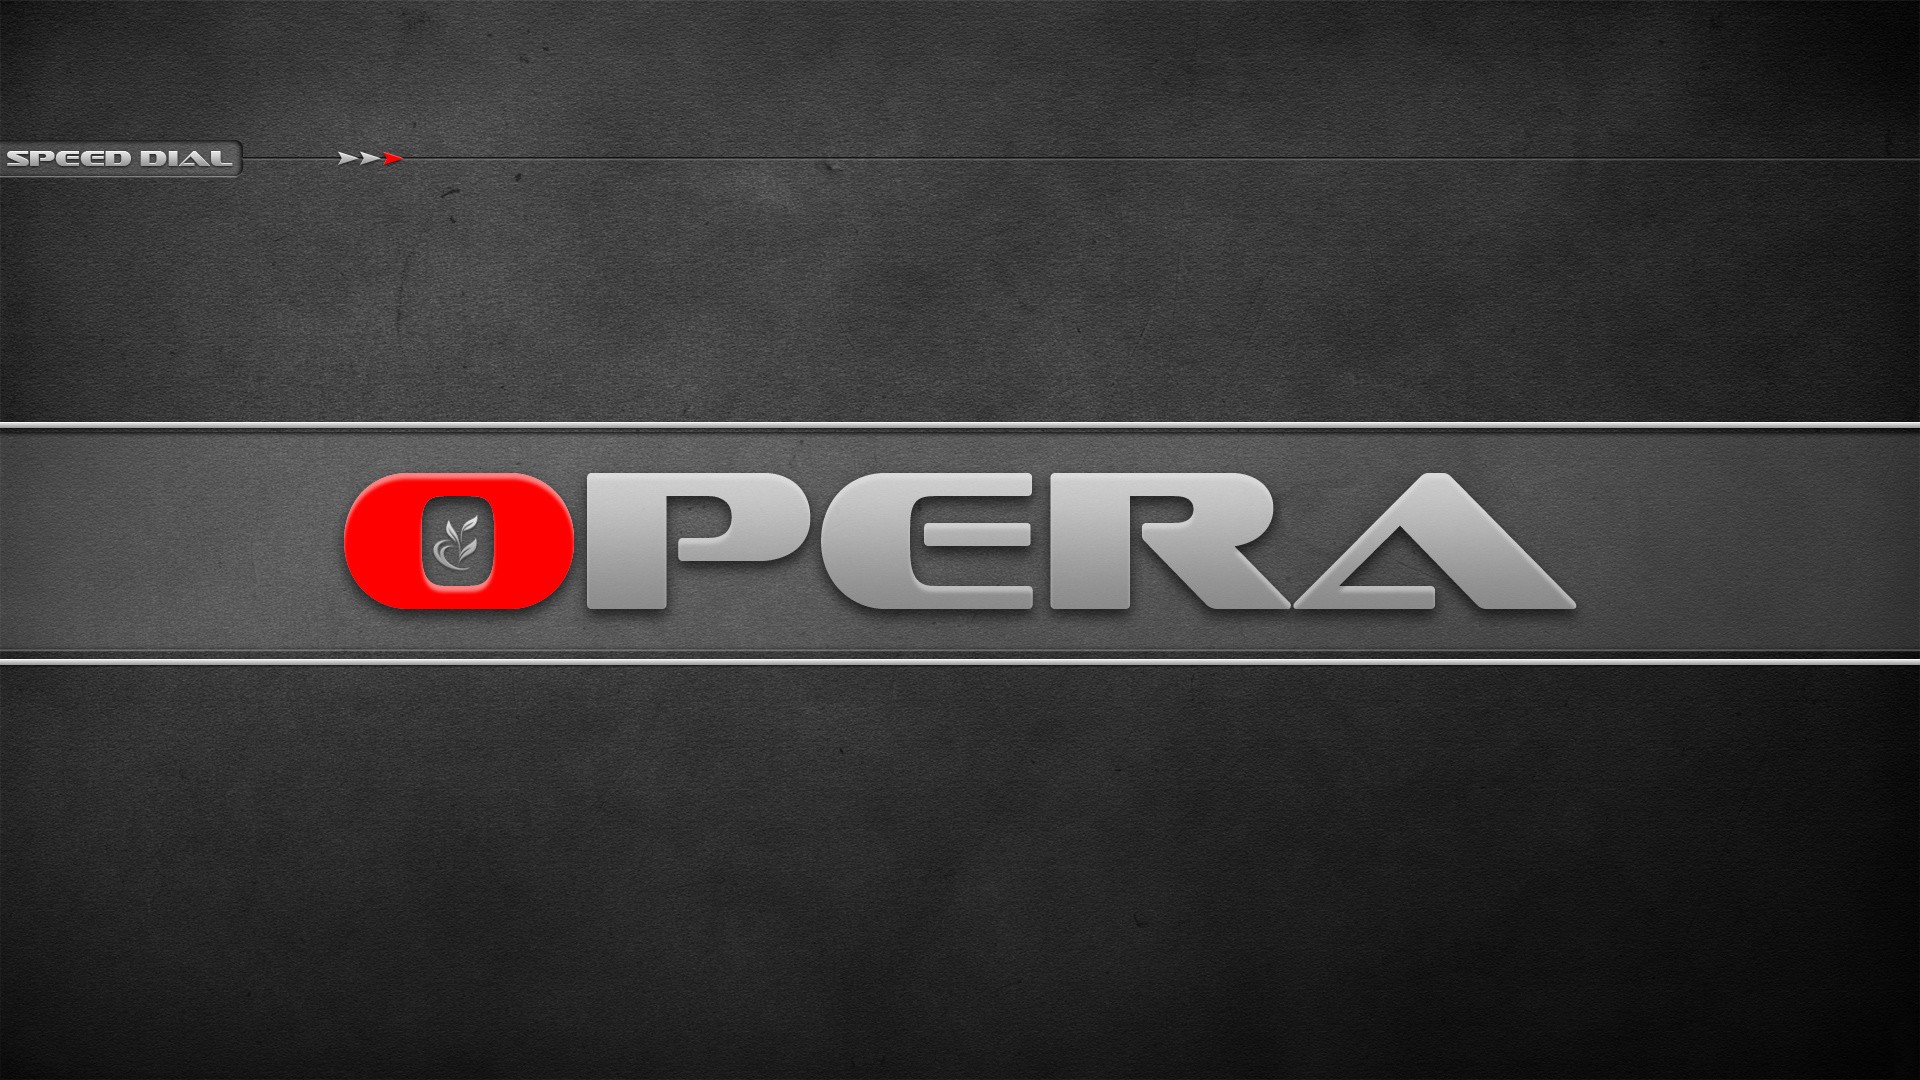 Opera Opera Browser Texture 1920x1080